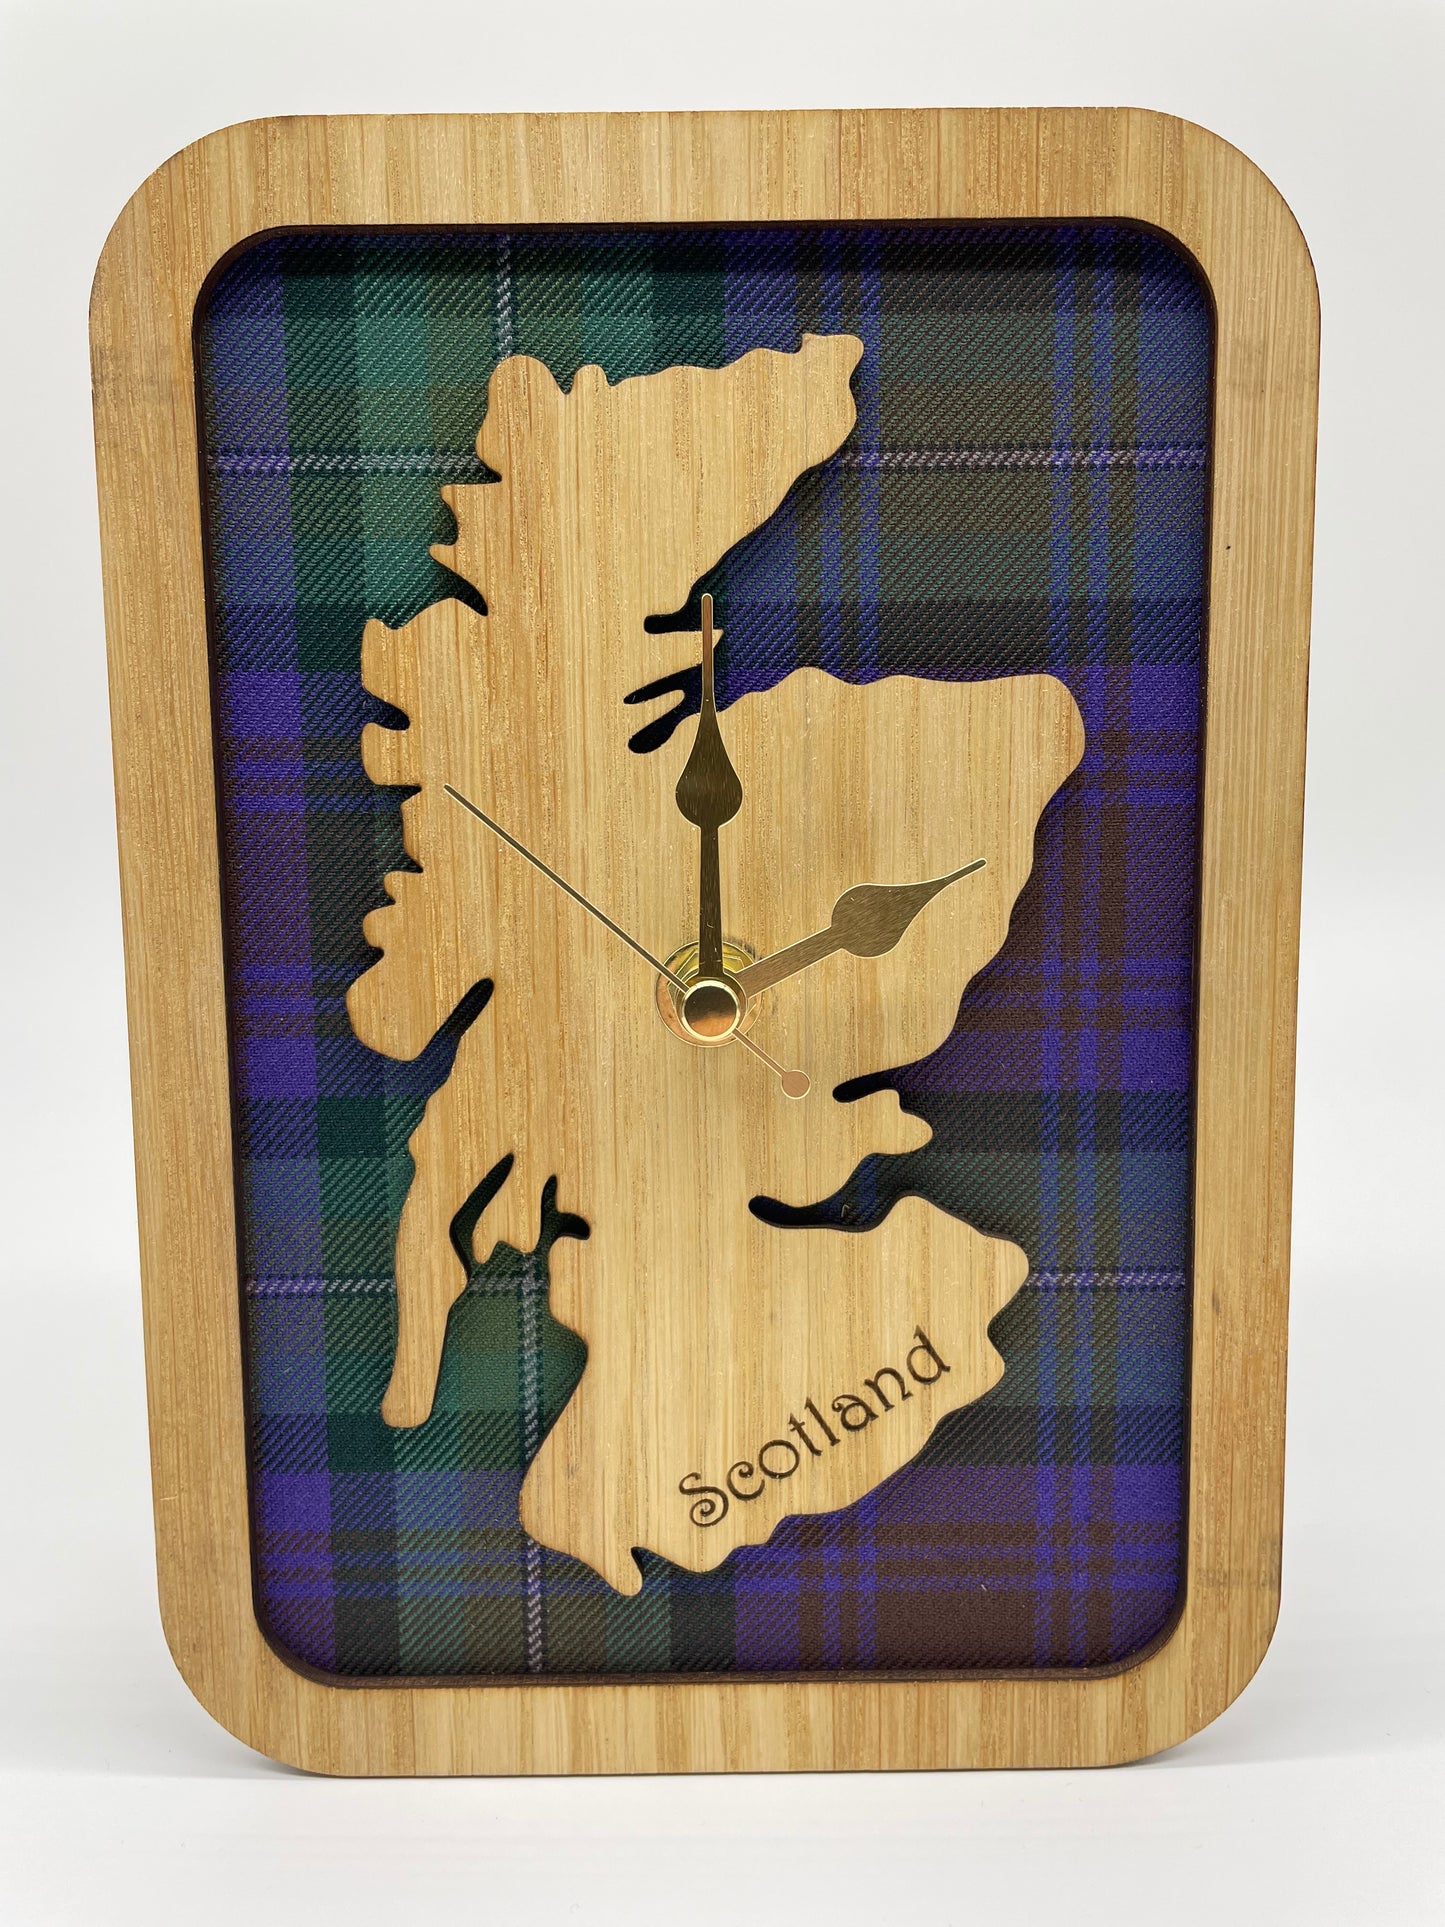 Small Inset Scotland Map Clock Made From Oak Veneered Wood With Isle of Skye Tartan Background